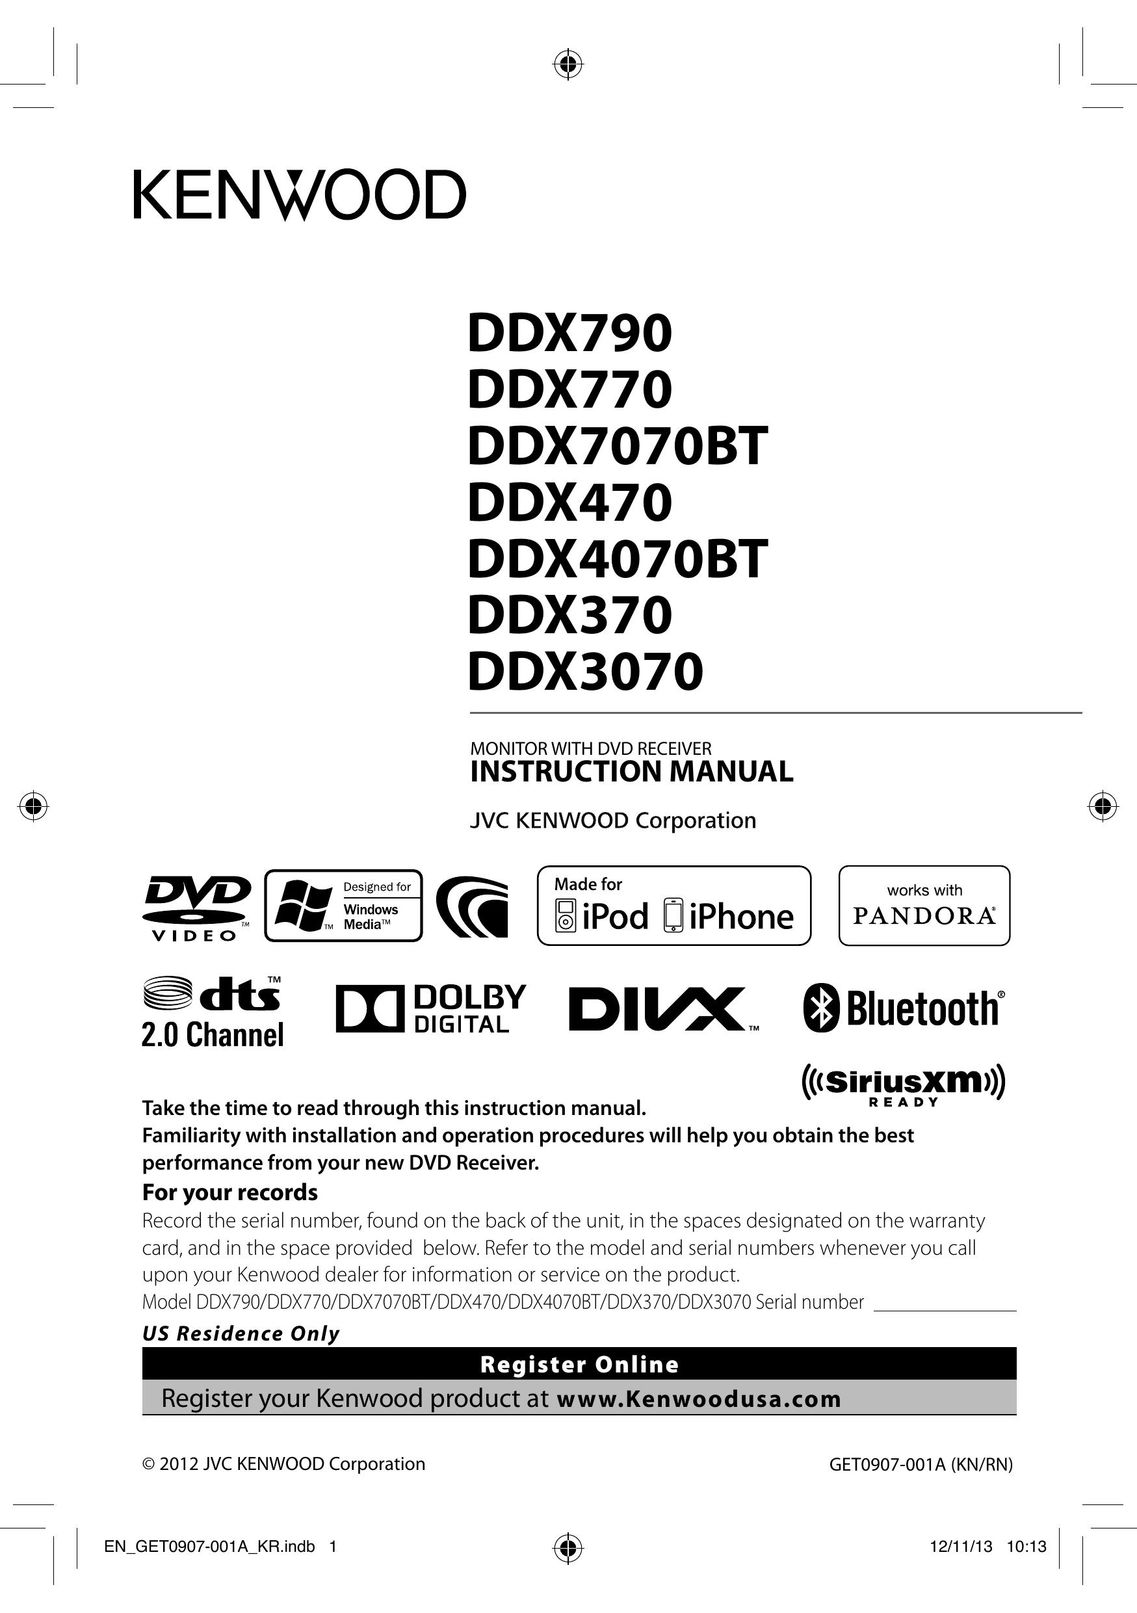 Kenwood DDX470 Computer Monitor User Manual